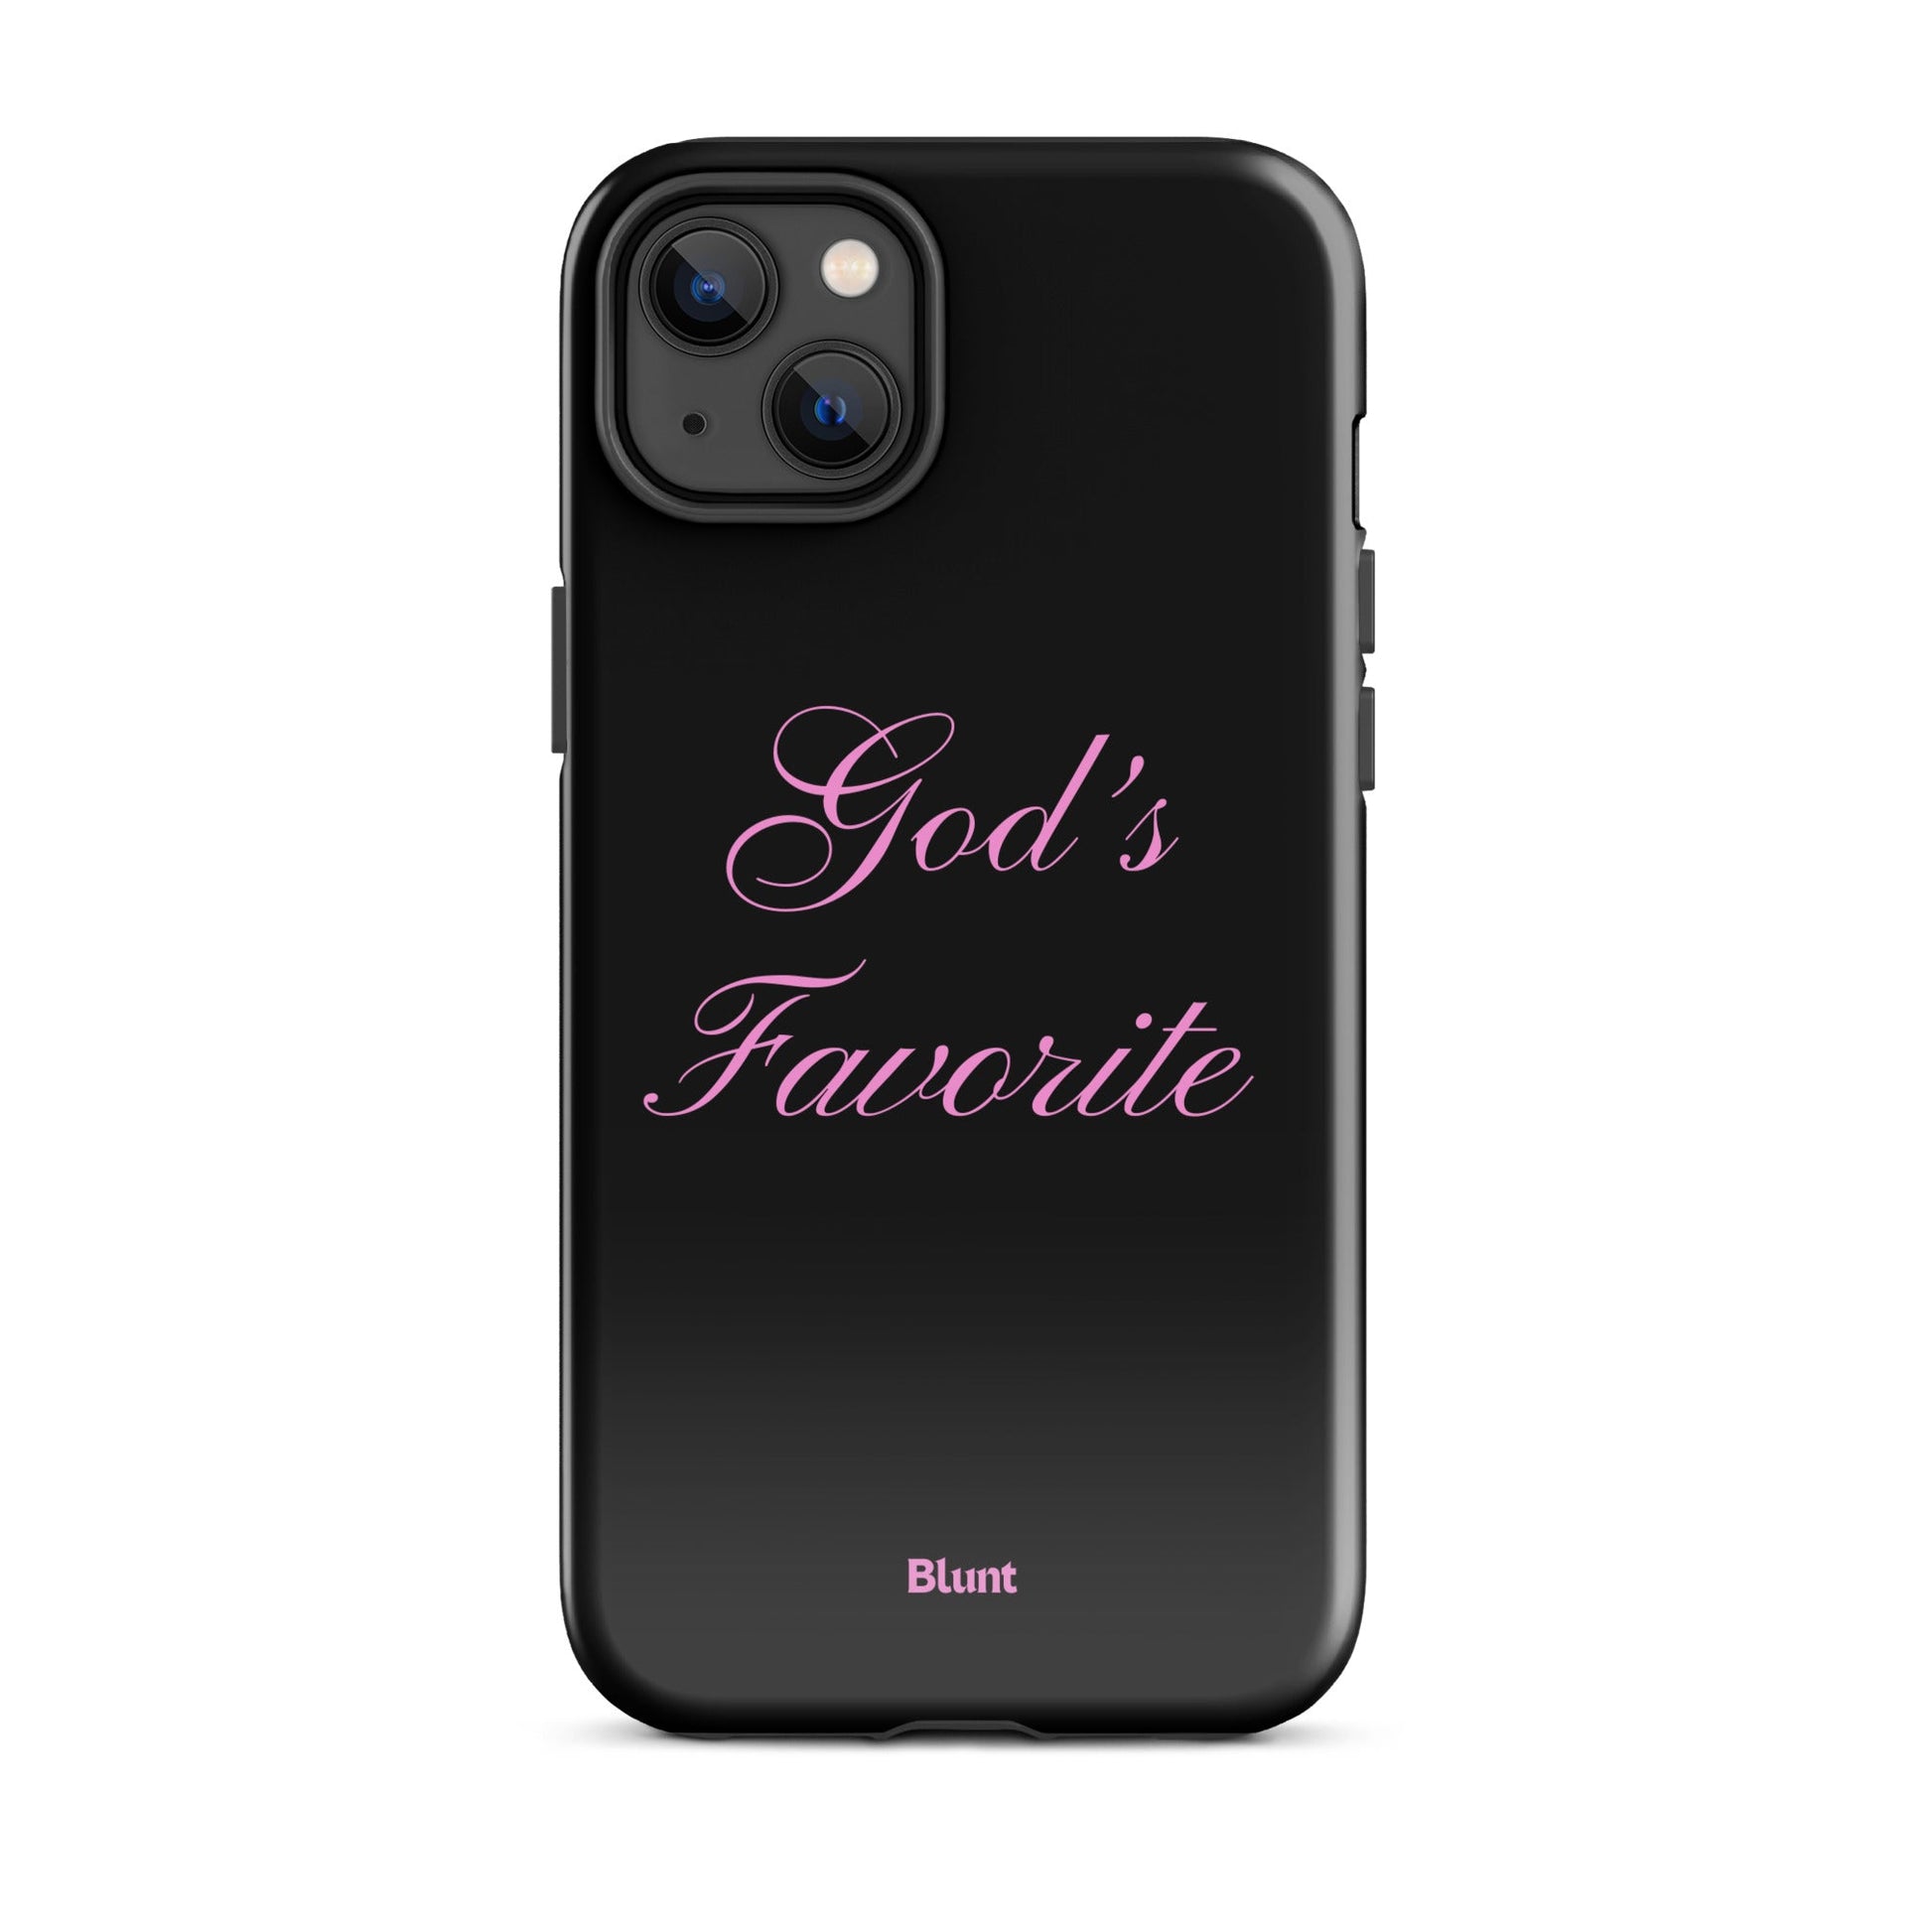 God's Favorite iPhone Case - blunt cases